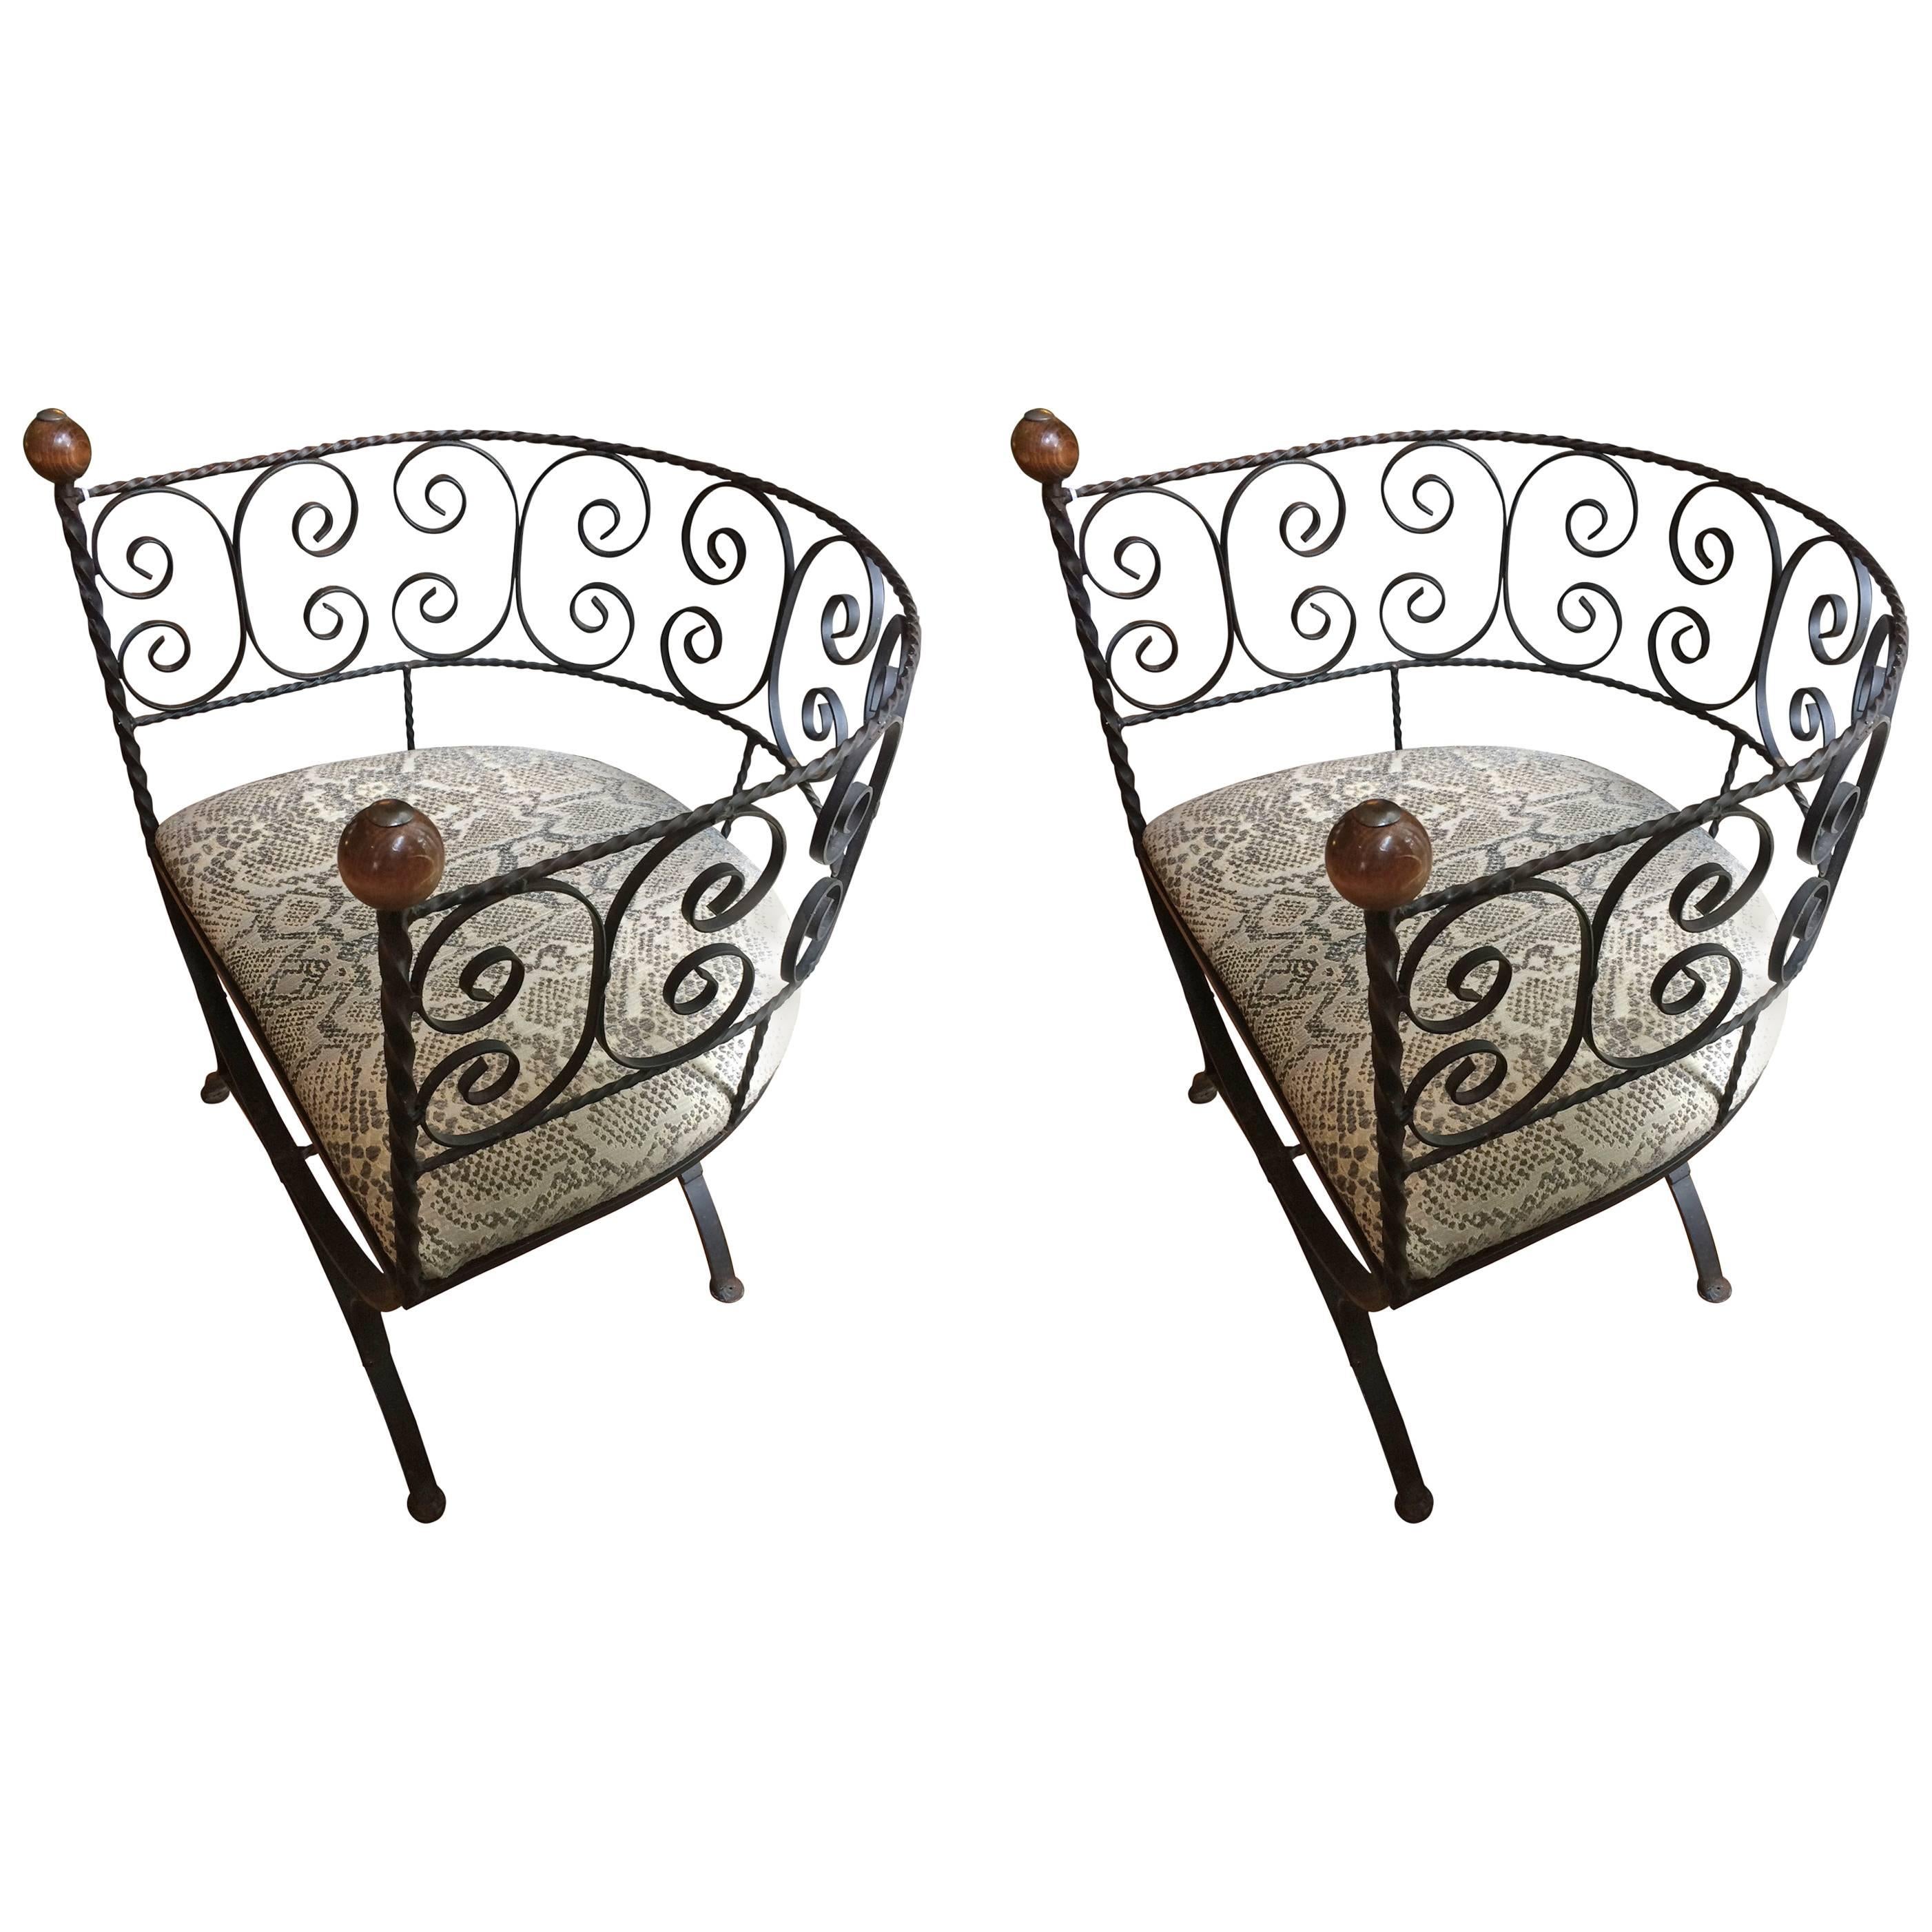 Delightful Pair of Elegant Iron Barrel Shaped Chairs